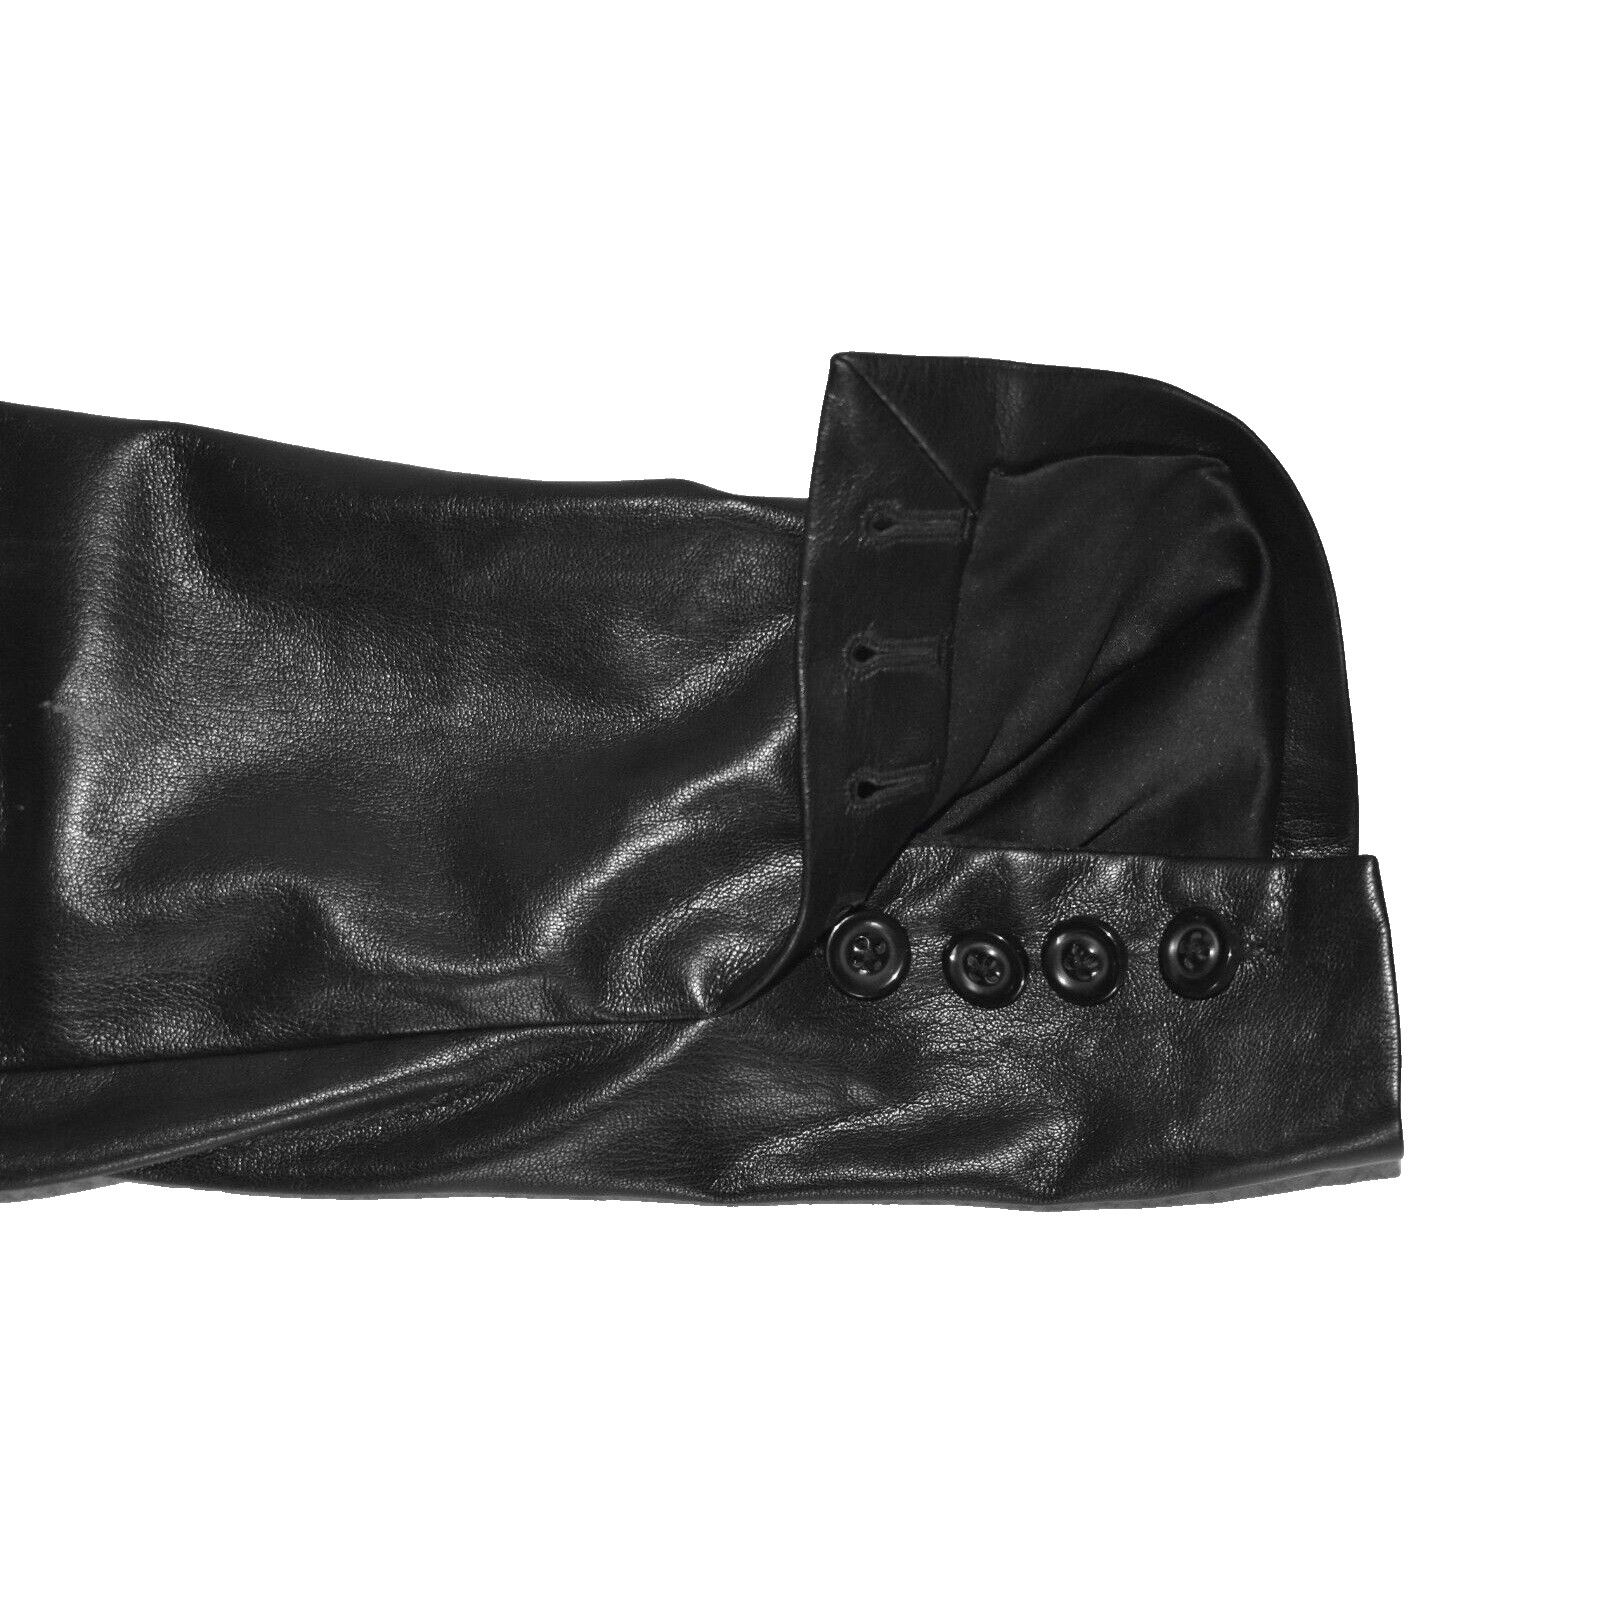 Alice + Olivia ALICE + OLIVIA Black Faux Leather Blazer Jacket Size L Size L / US 10 / IT 46 - 7 Thumbnail